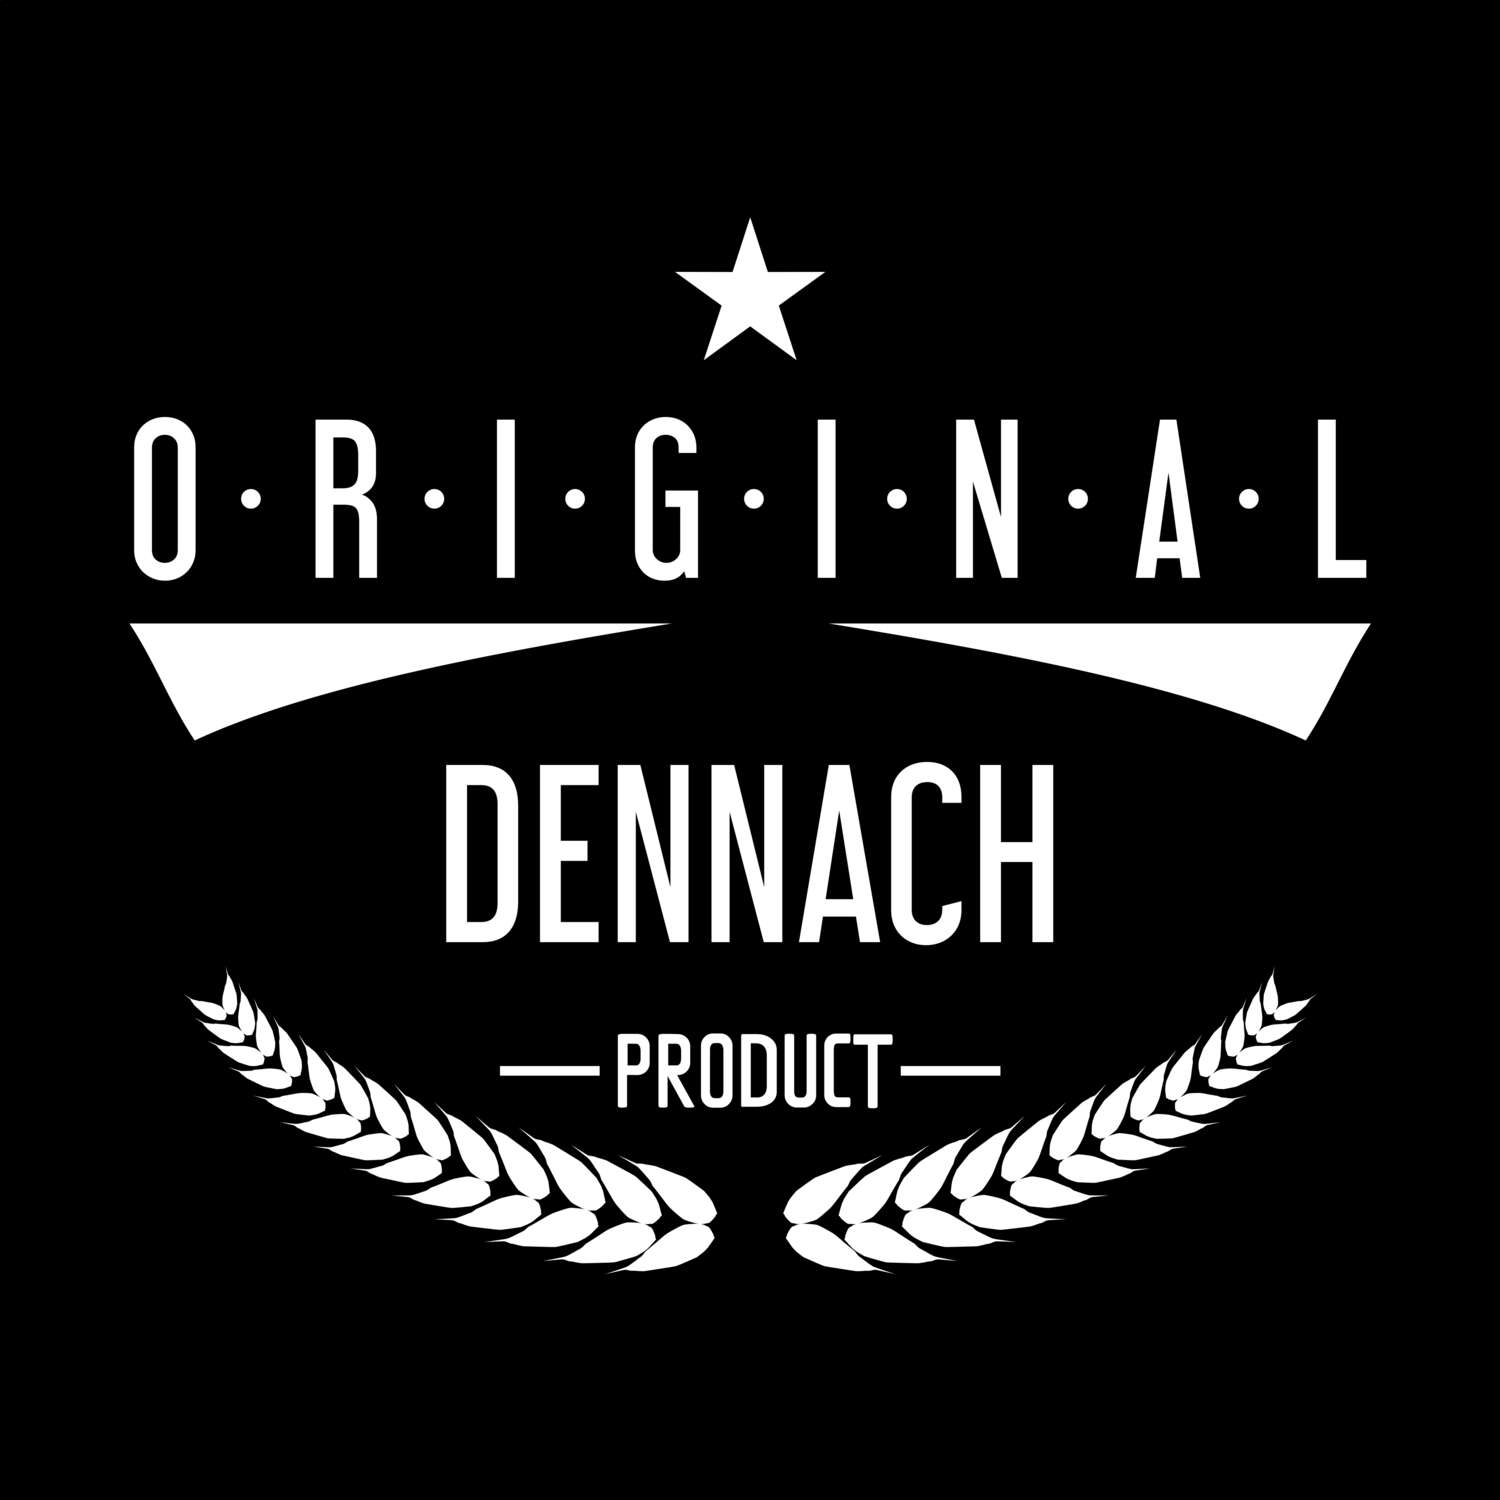 Dennach T-Shirt »Original Product«